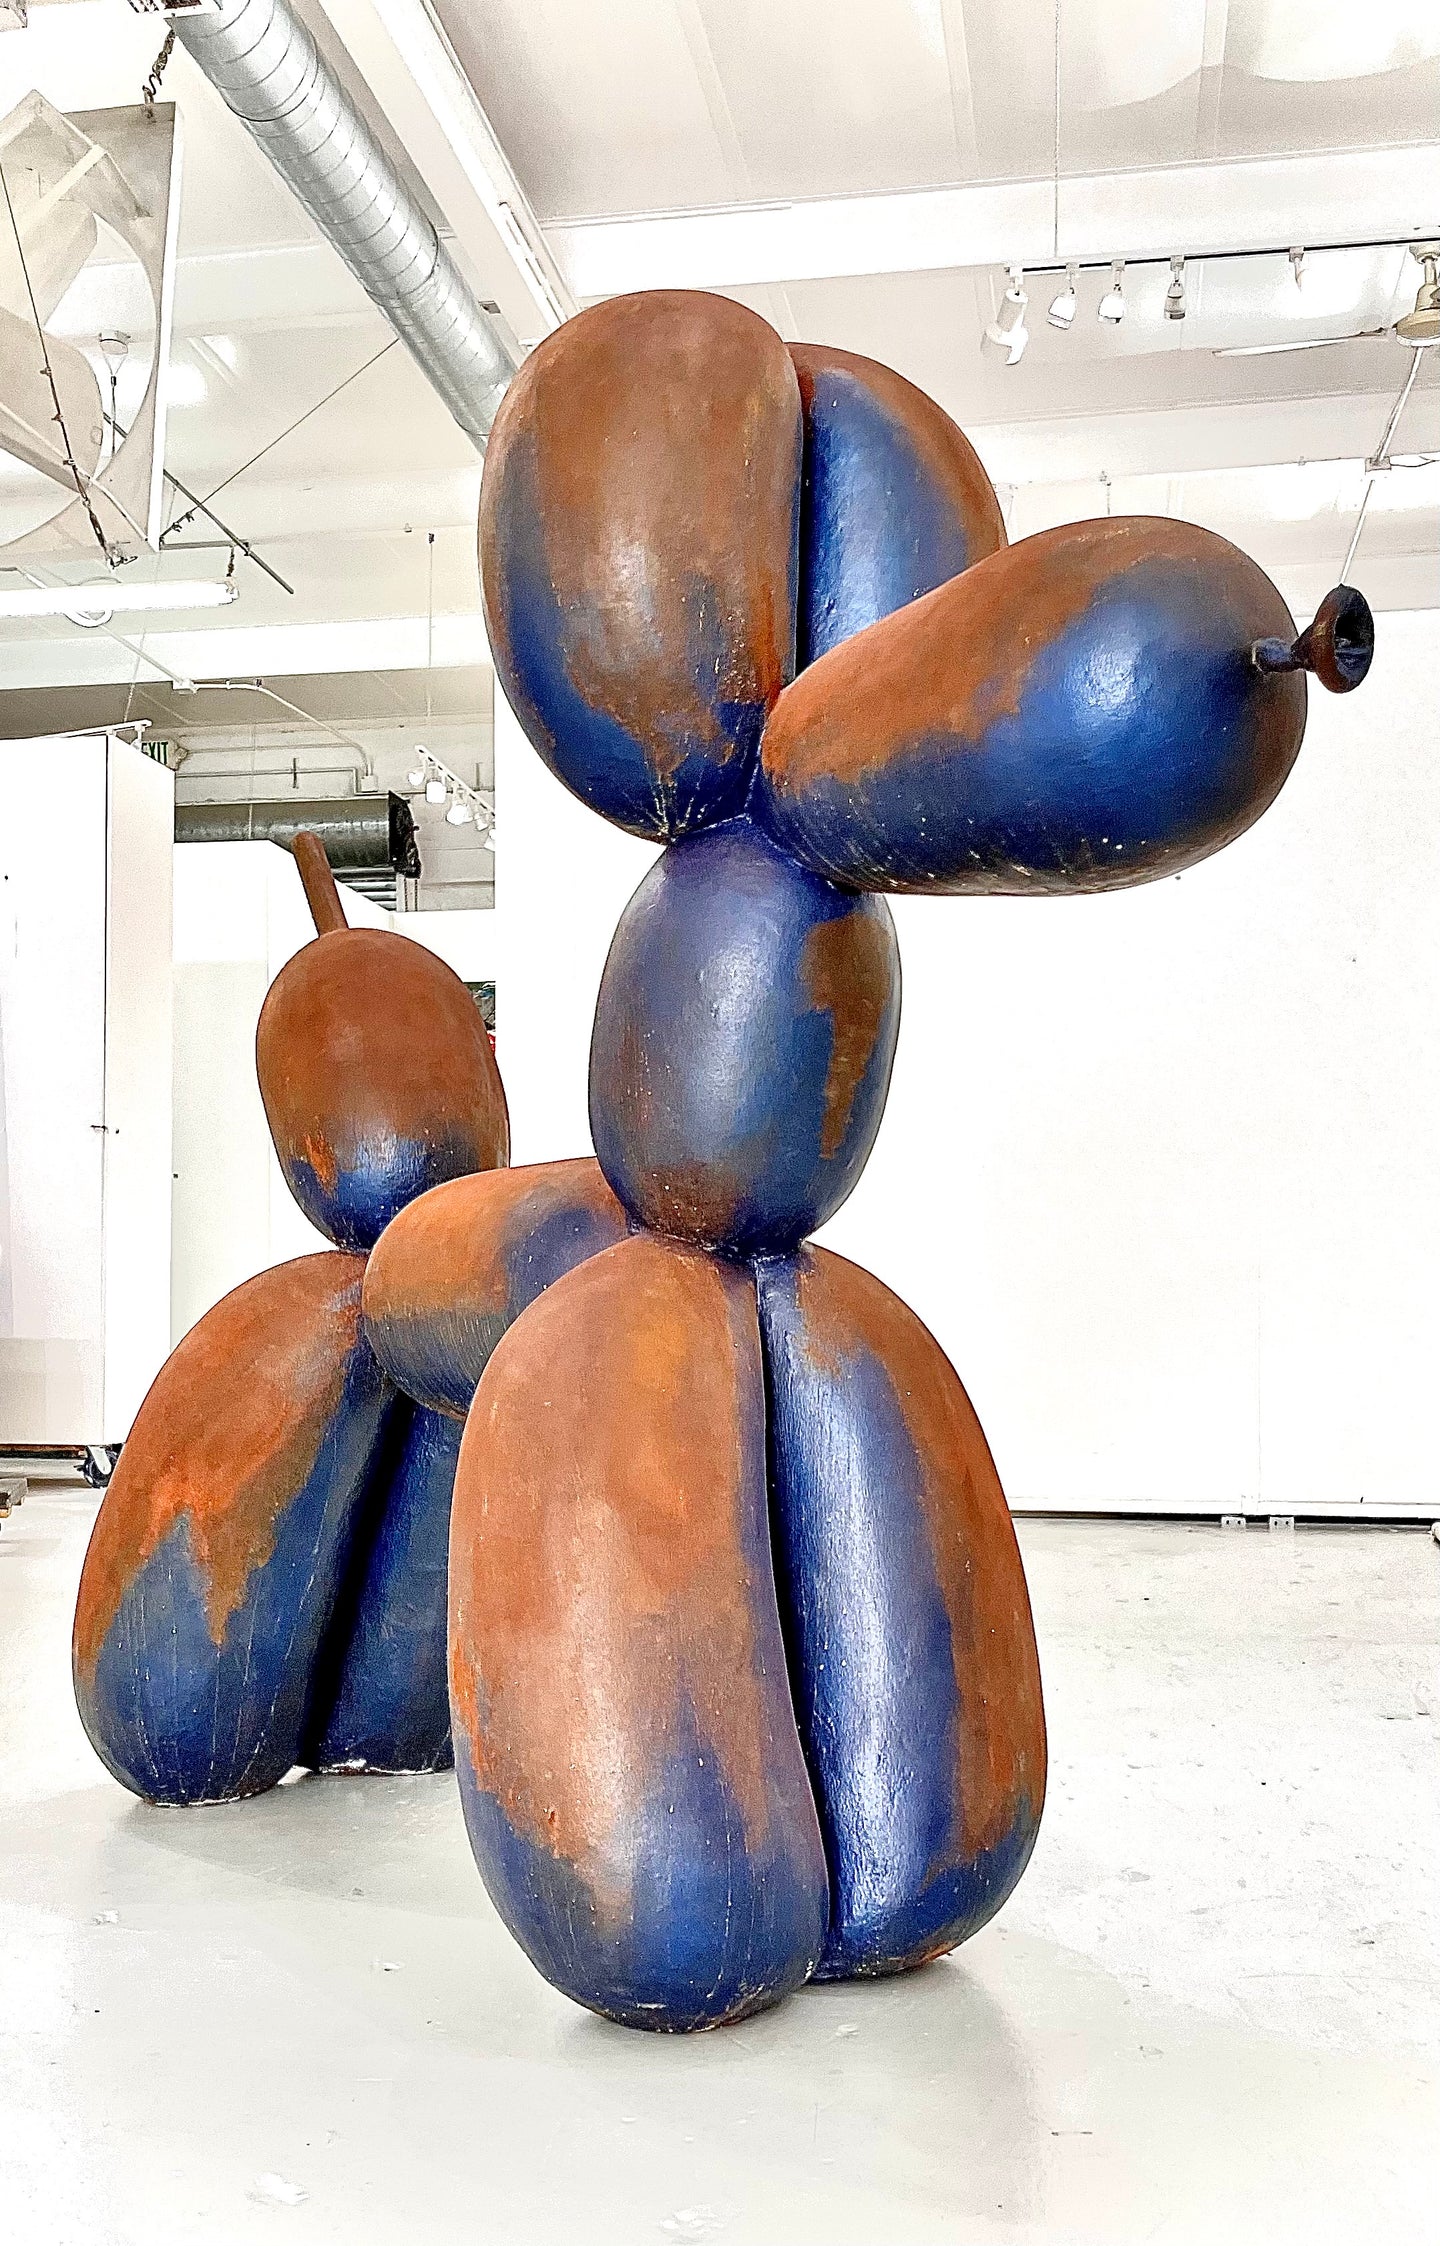 Hamilton Aguiar, Rusty (Large dog sculpture), 2016, Rust Patina on Mixed Media, 68h x 50w x 23d inches, 